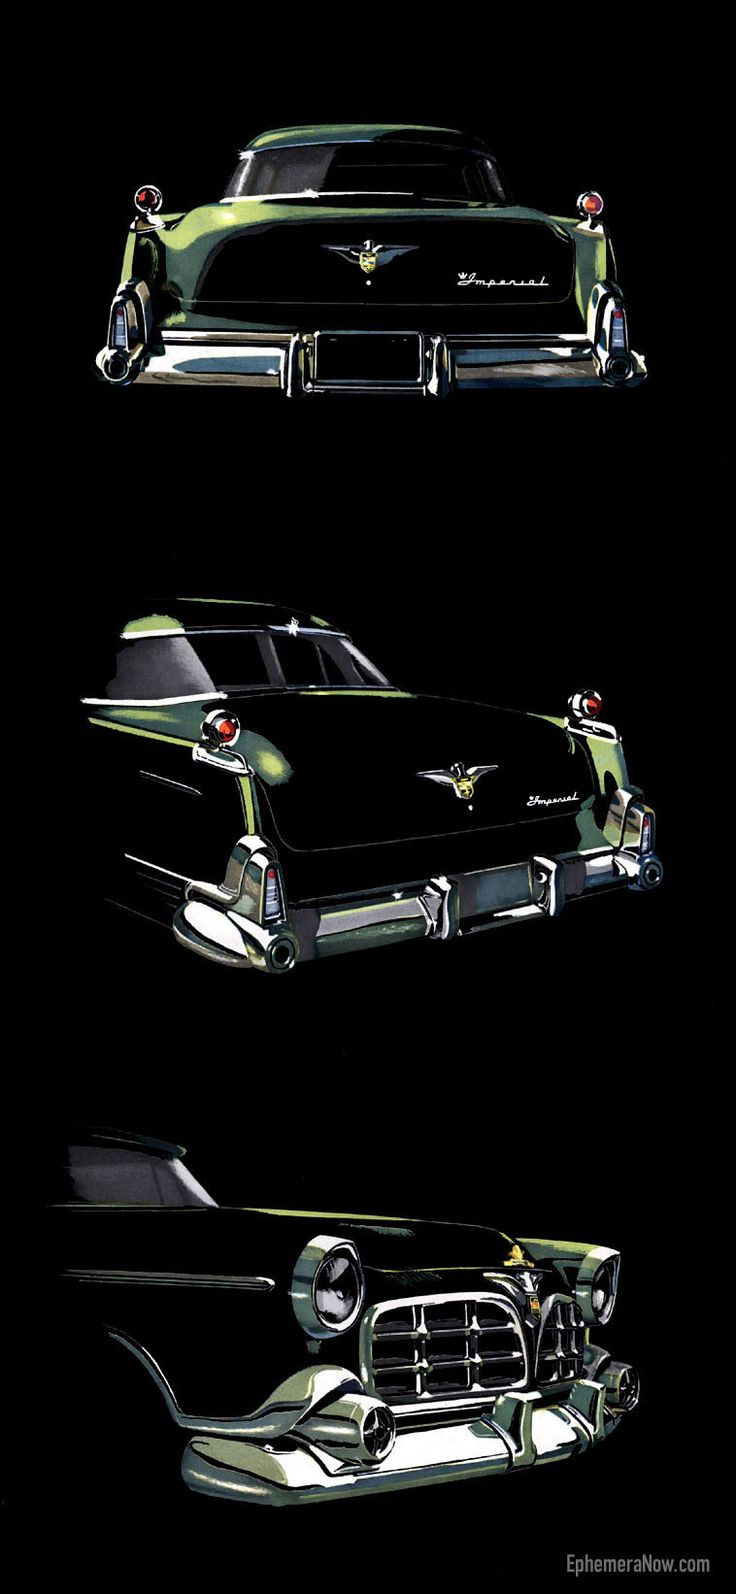 Chrysler auto - image